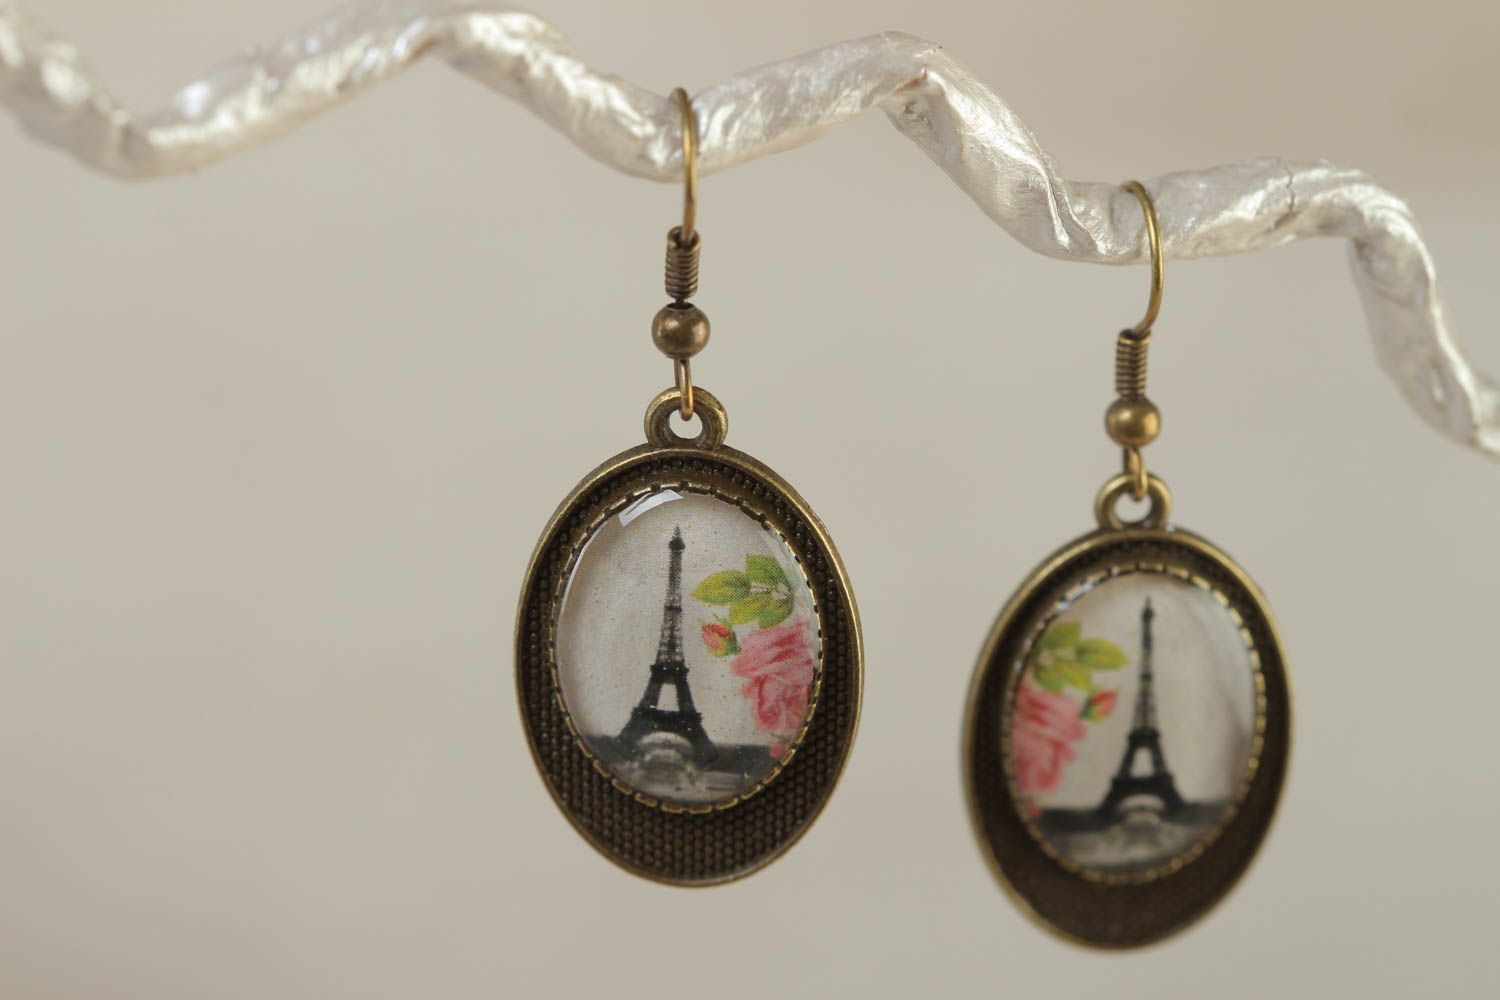 Handmade oval metal earring with Eiffel tower image coated with glass glaze photo 1